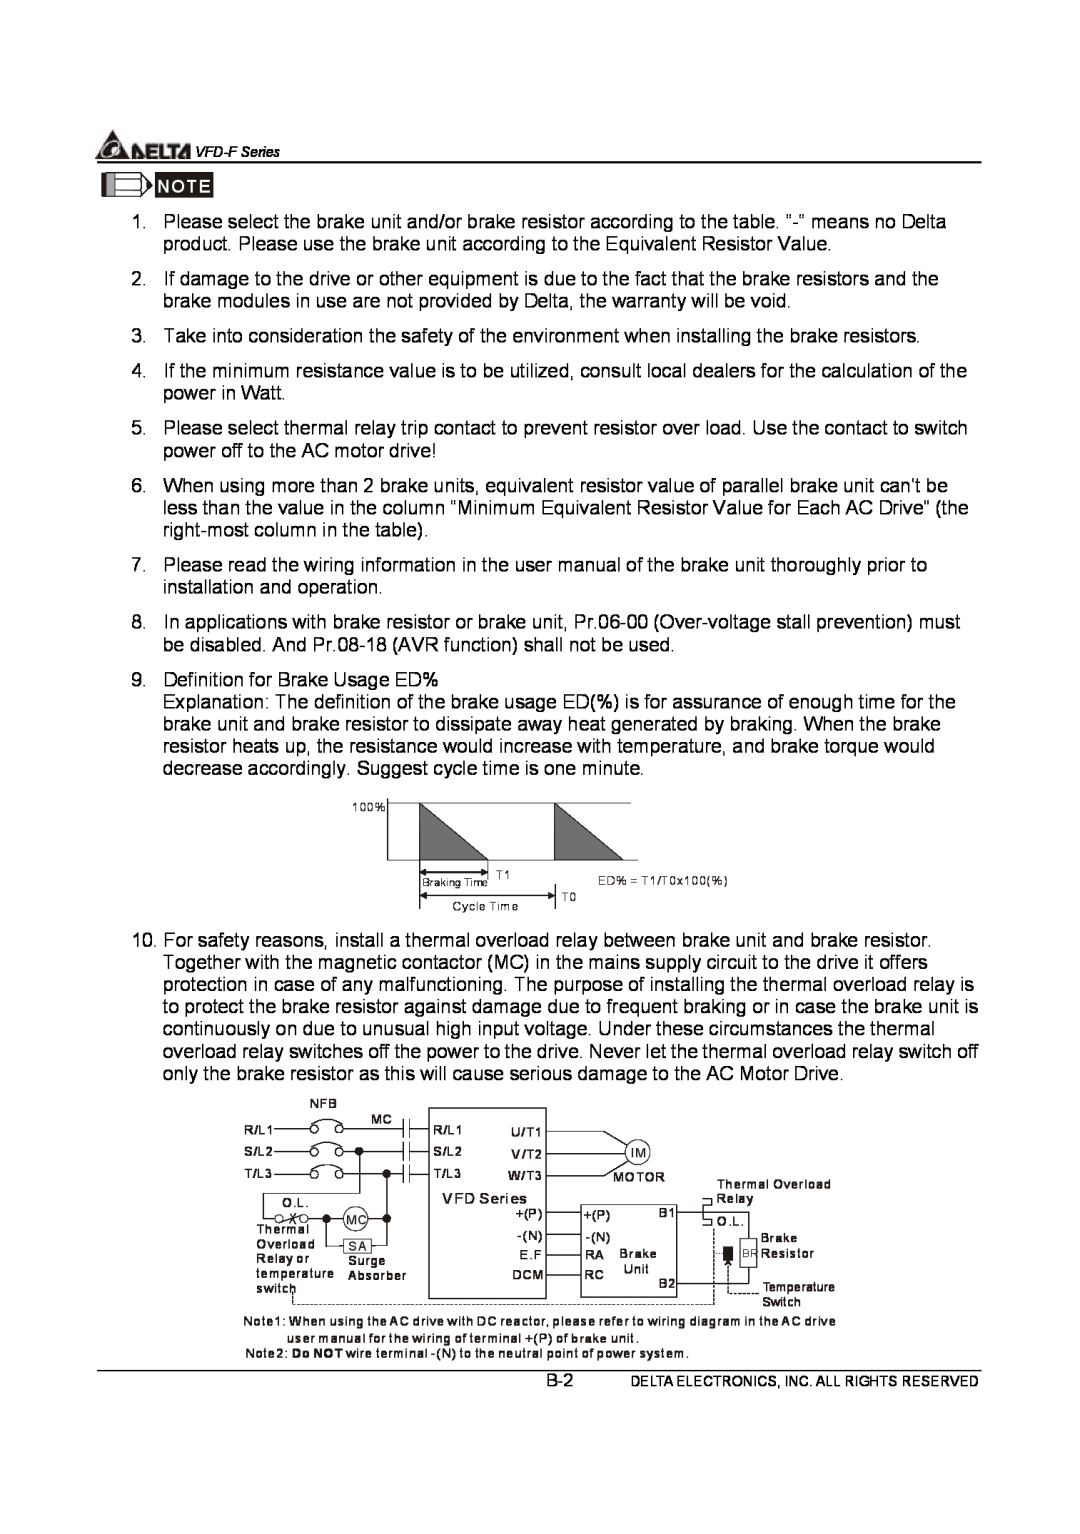 Delta Electronics VFD-F Series manual Definition for Brake Usage ED% 